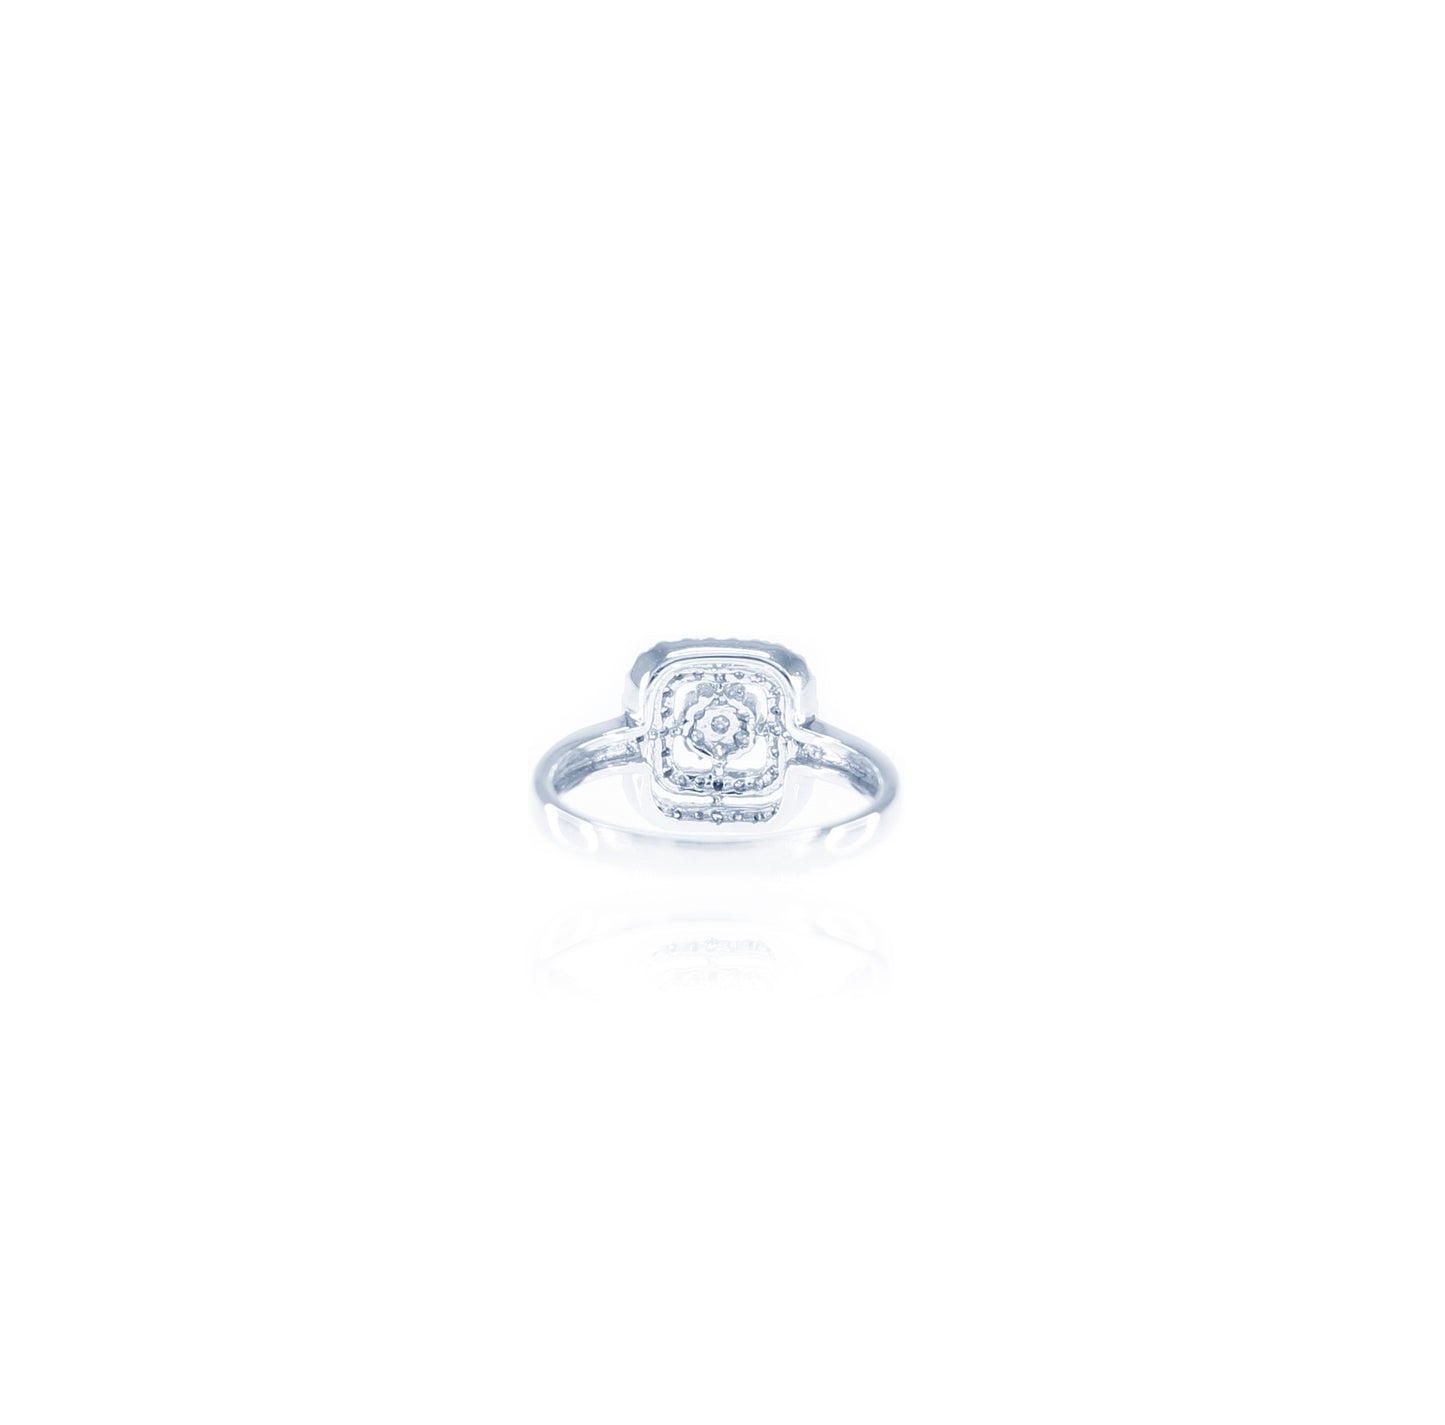 Brilliance, a Duet Halo Design Diamond Ring in 18K White Gold